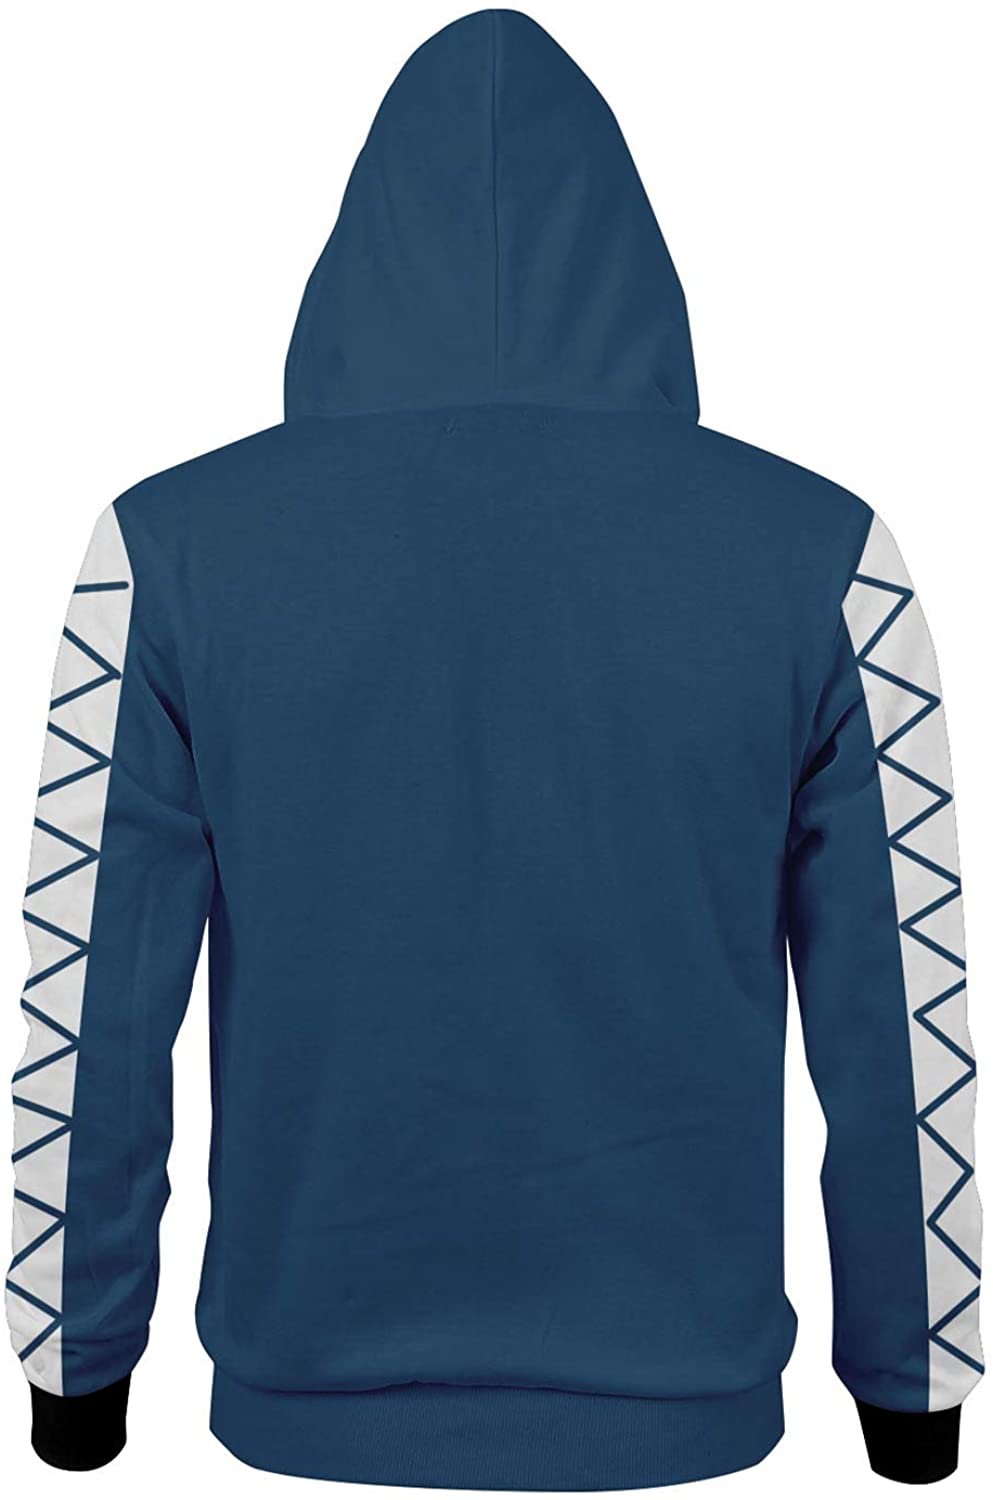 Newcos Idia Shroud Hoodie Zip-up Jacket Cosplay Costume Sweatshirt Coat Adult